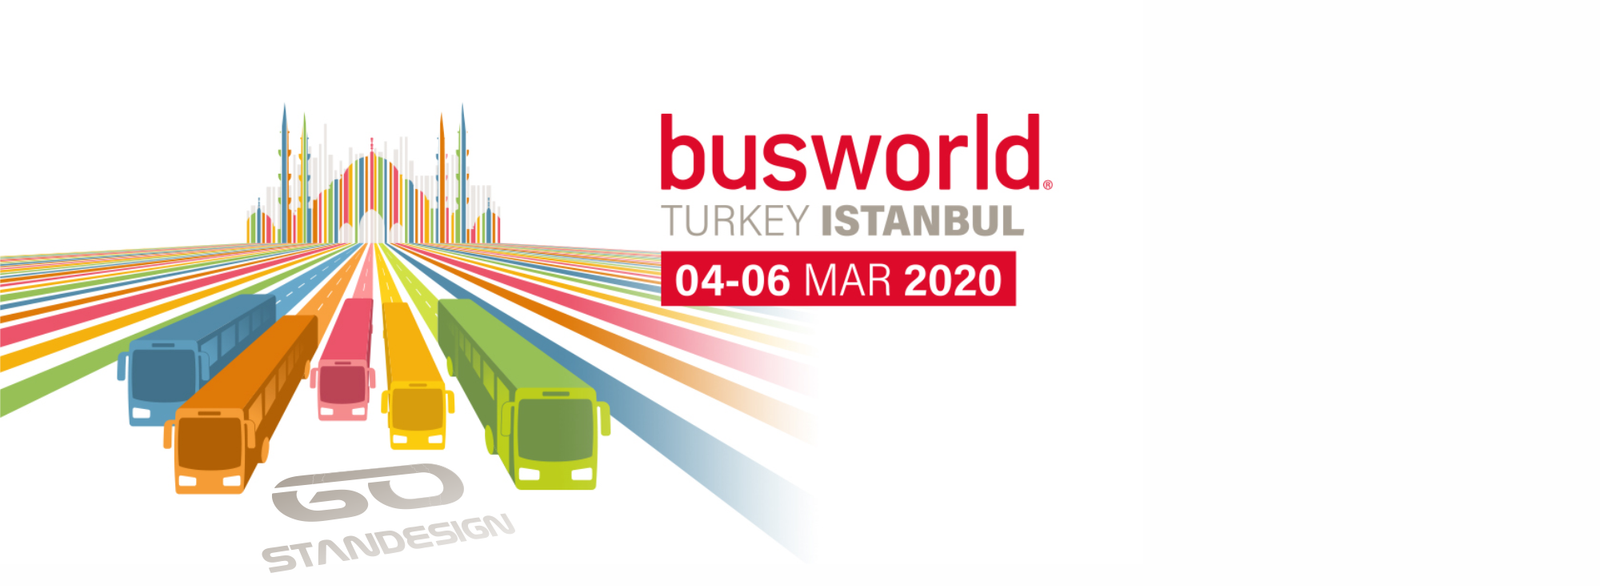 Busworld Turkey 2020 Istanbul